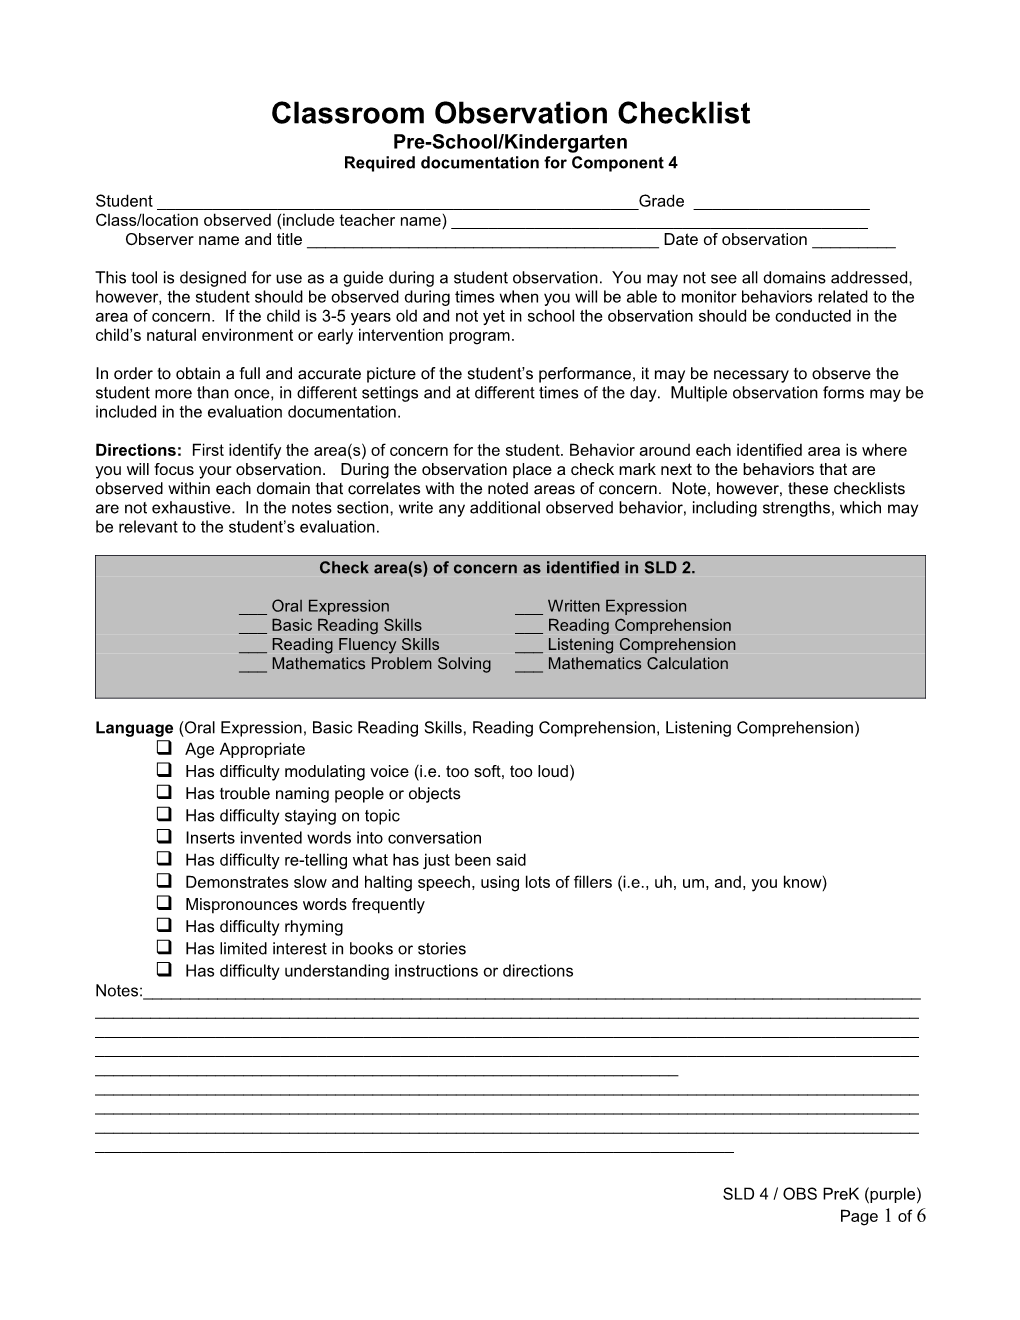 Observation Checklist Pre-School/Kindergarten (SLD4-OBS Pre-K)